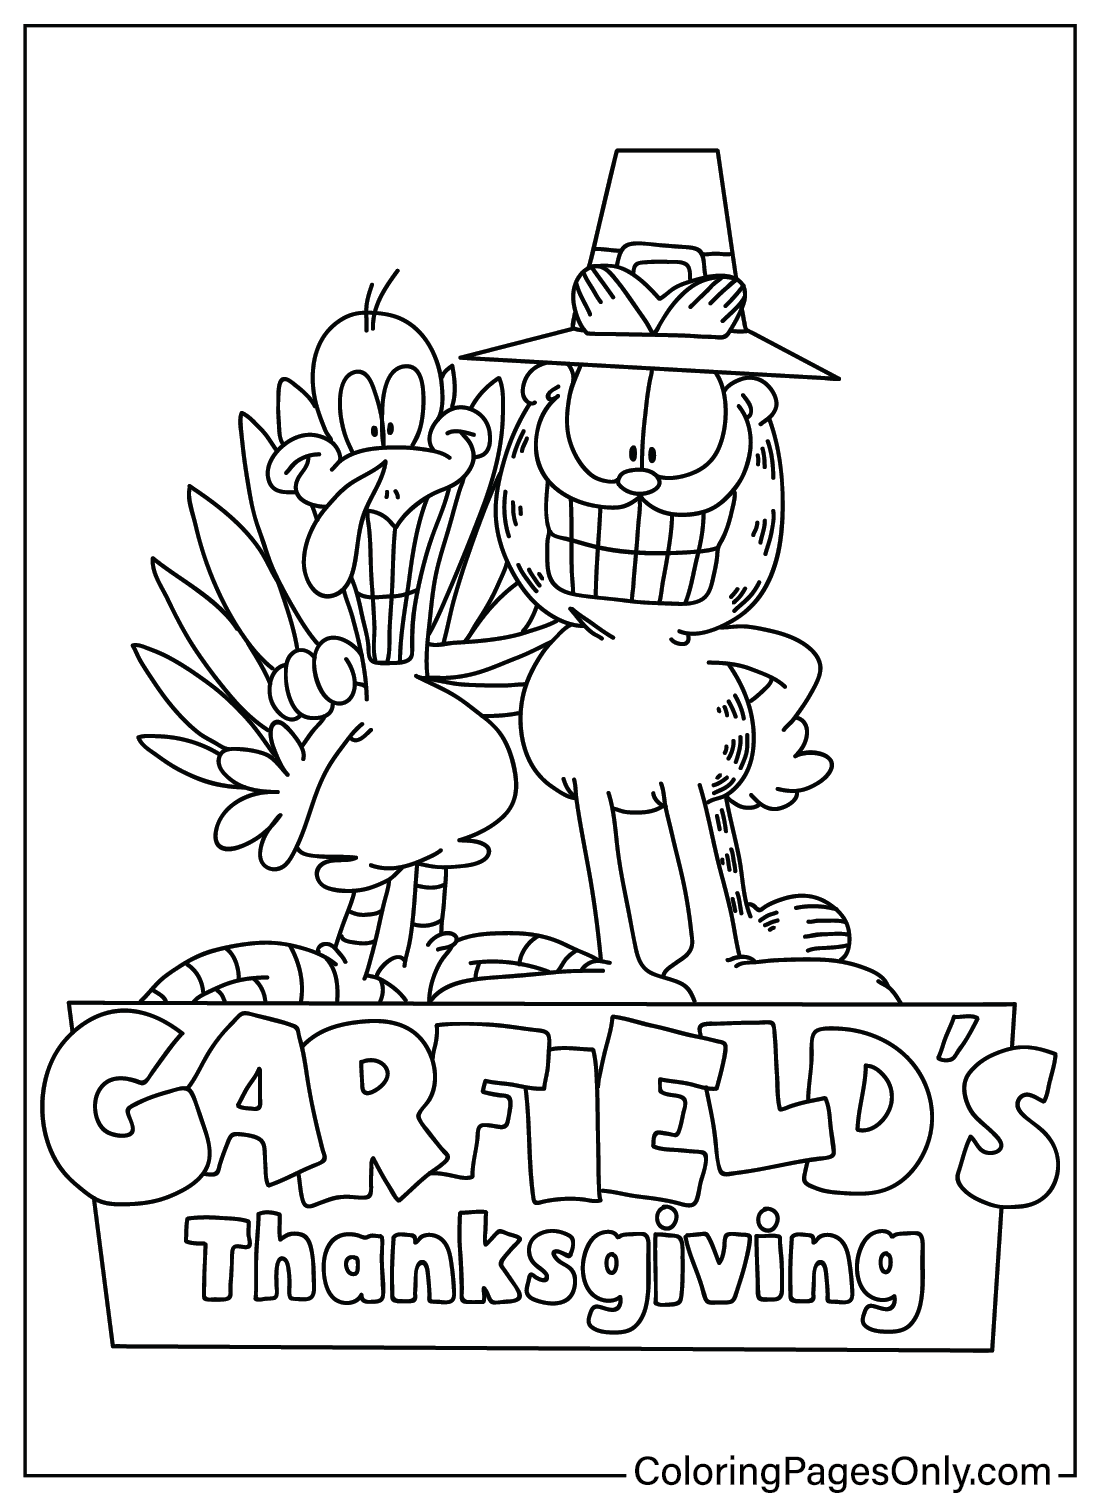 Thanksgiving Garfield kleurplaat uit Thanksgiving Cartoon